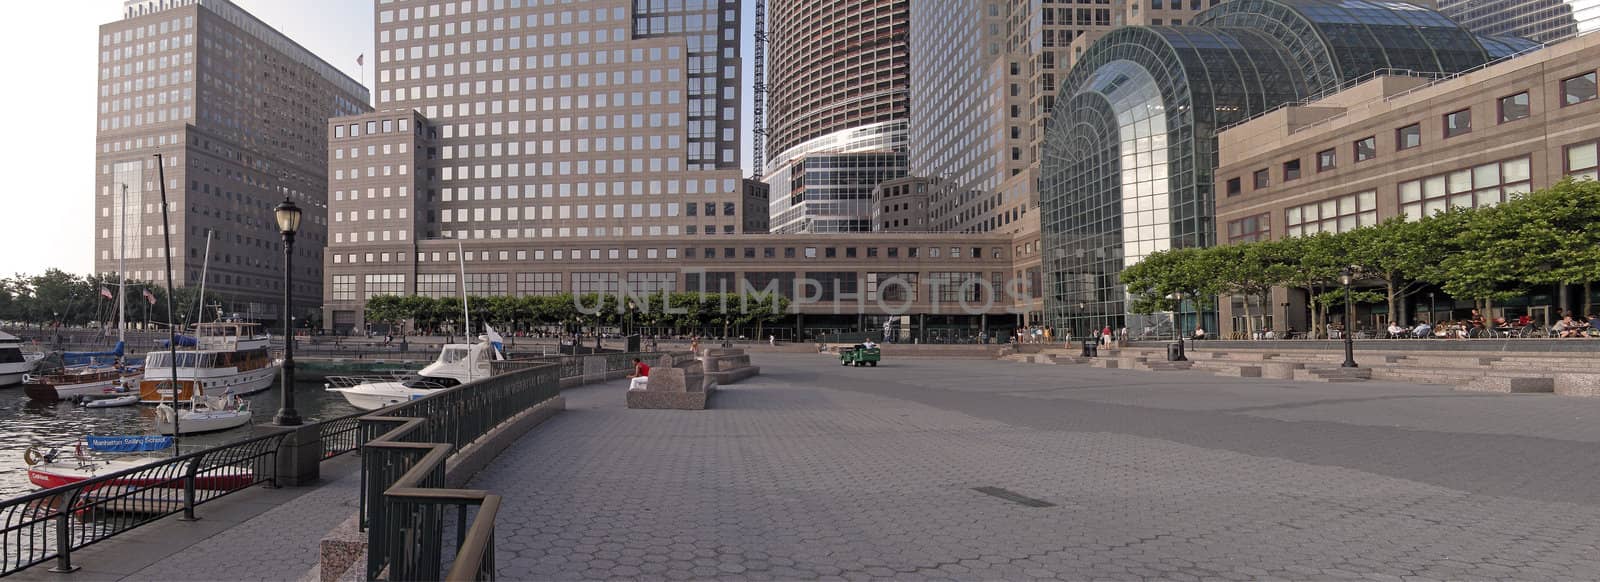 world financial center in new york city panorama photo